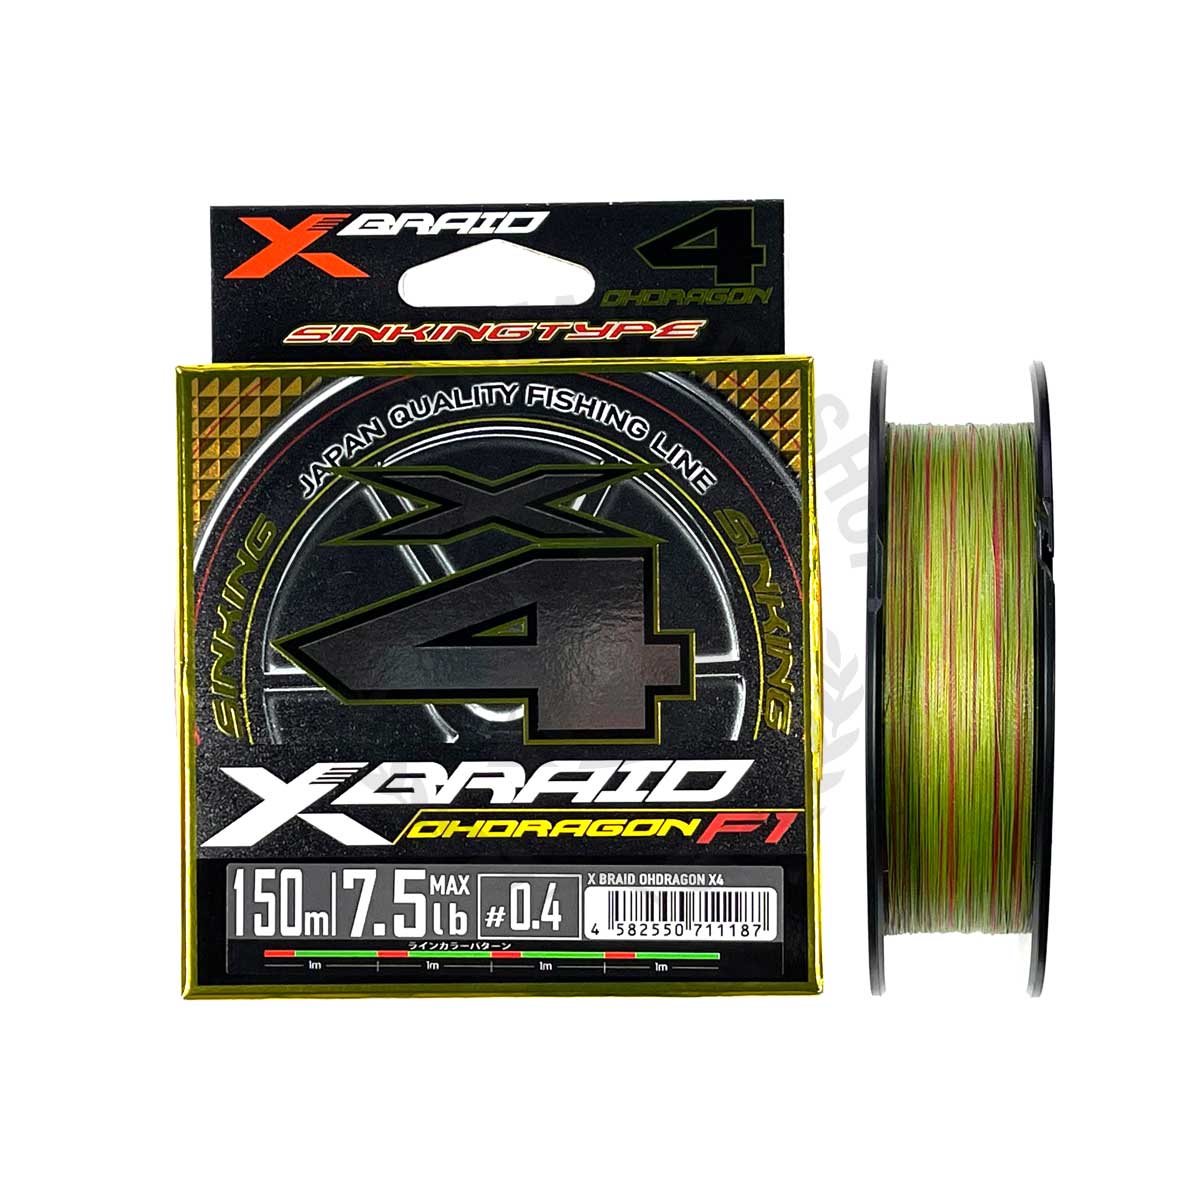 YGK X-Braid Ohdragon F1 X4 150m #PE-0.4 (Multi Color)*สายพีอี - 7